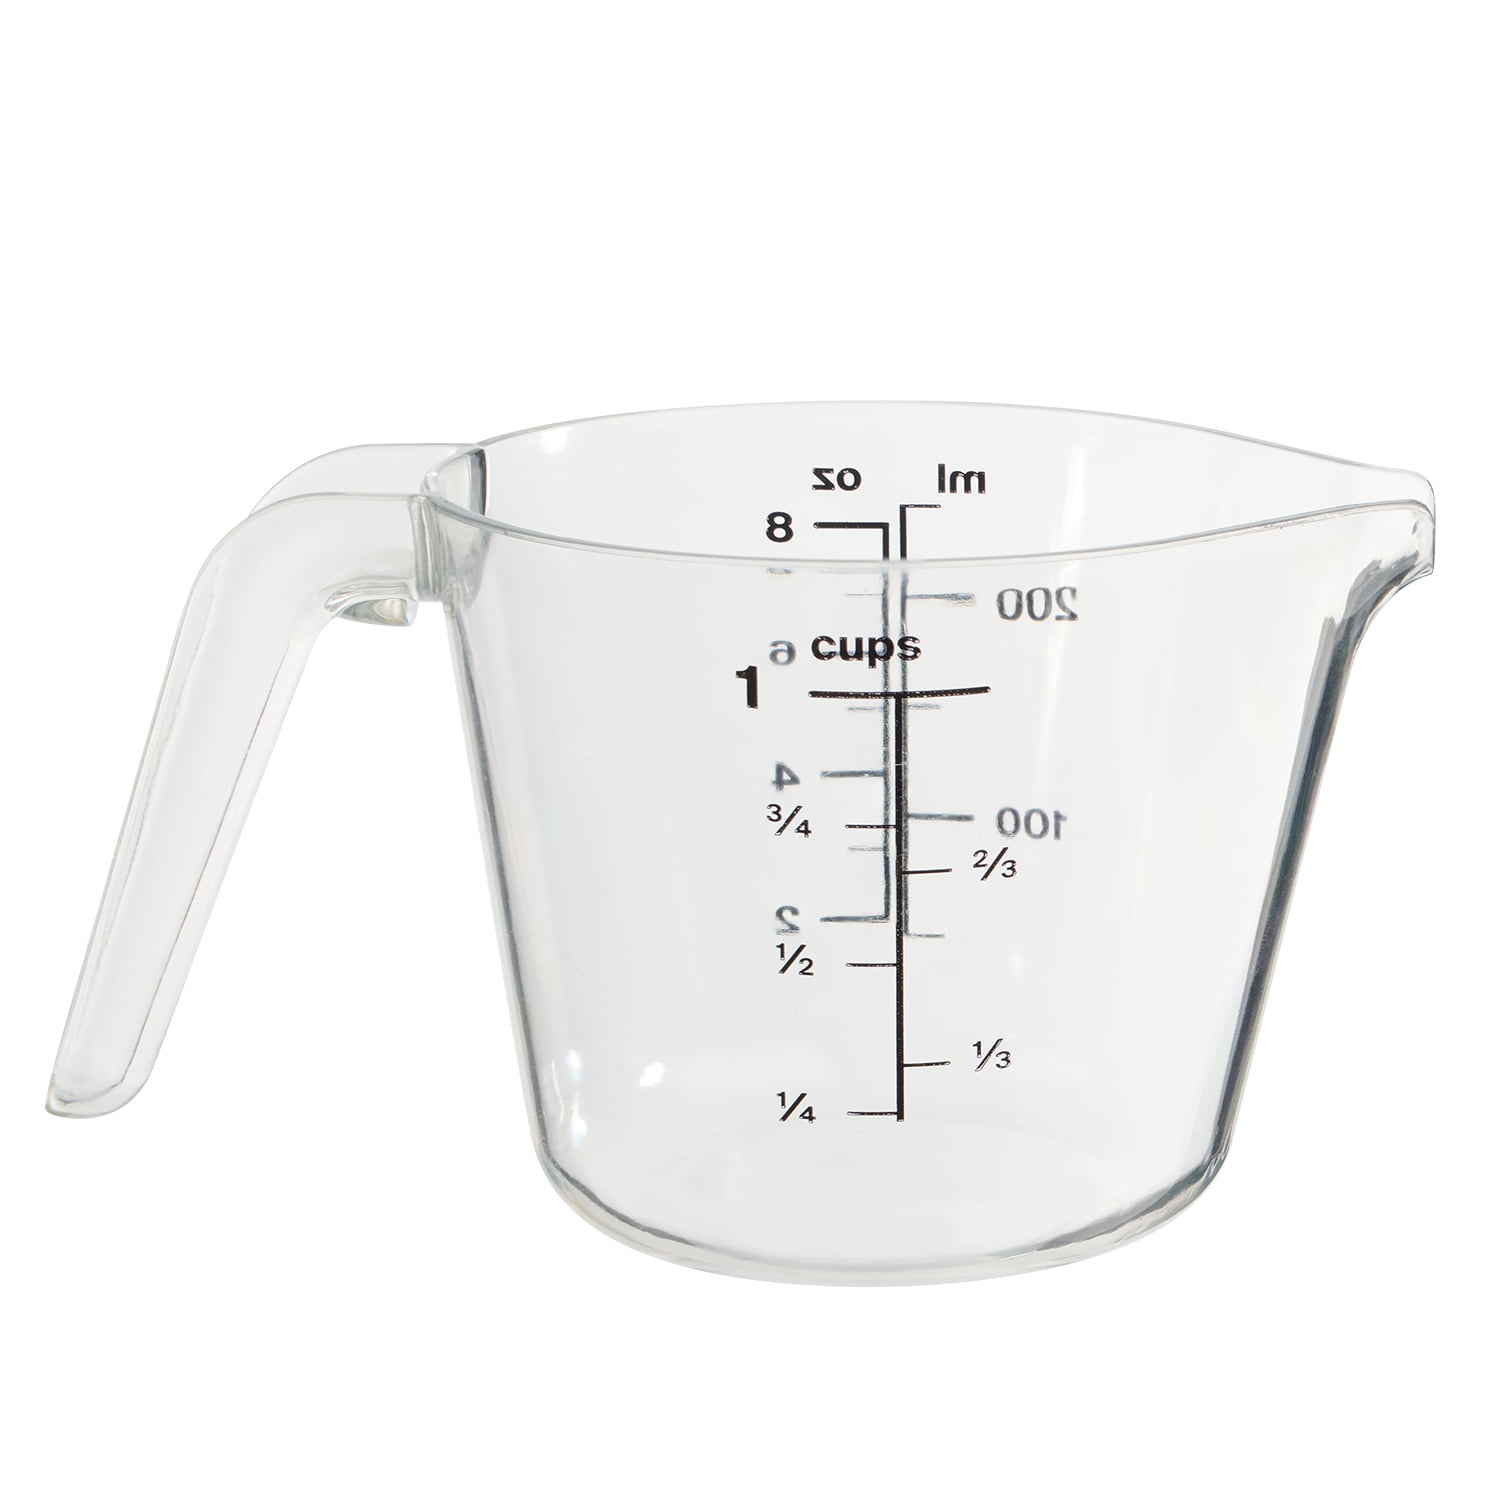 Mainstays 1/4 Cup BPA-Free Plastic Mini Measuring Cup, Black/Transparent -  Walmart.com